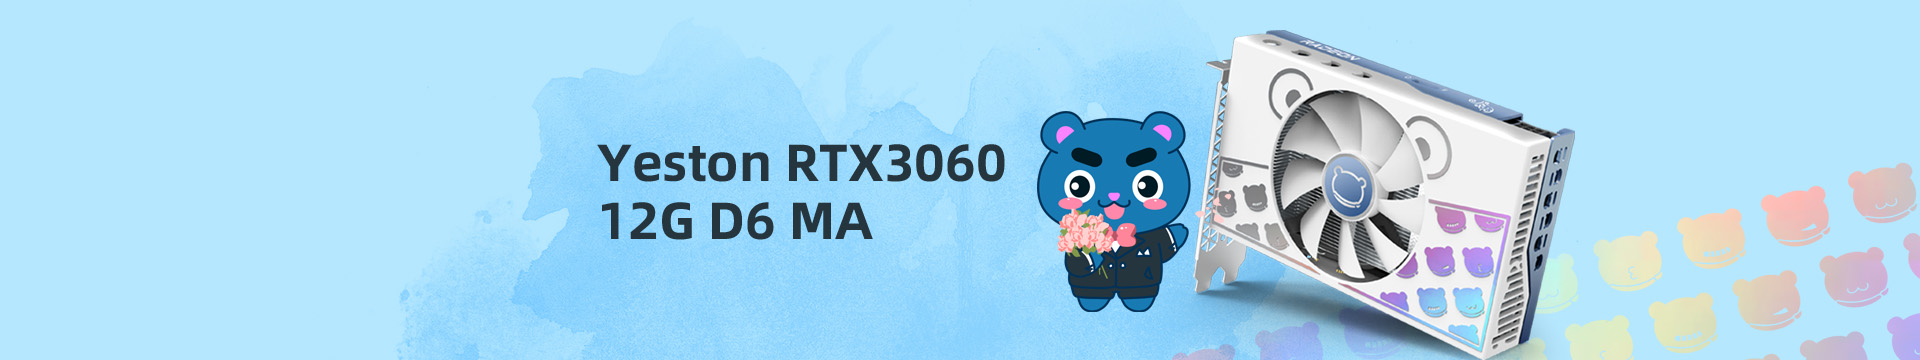 RTX3060-12G D6 MA